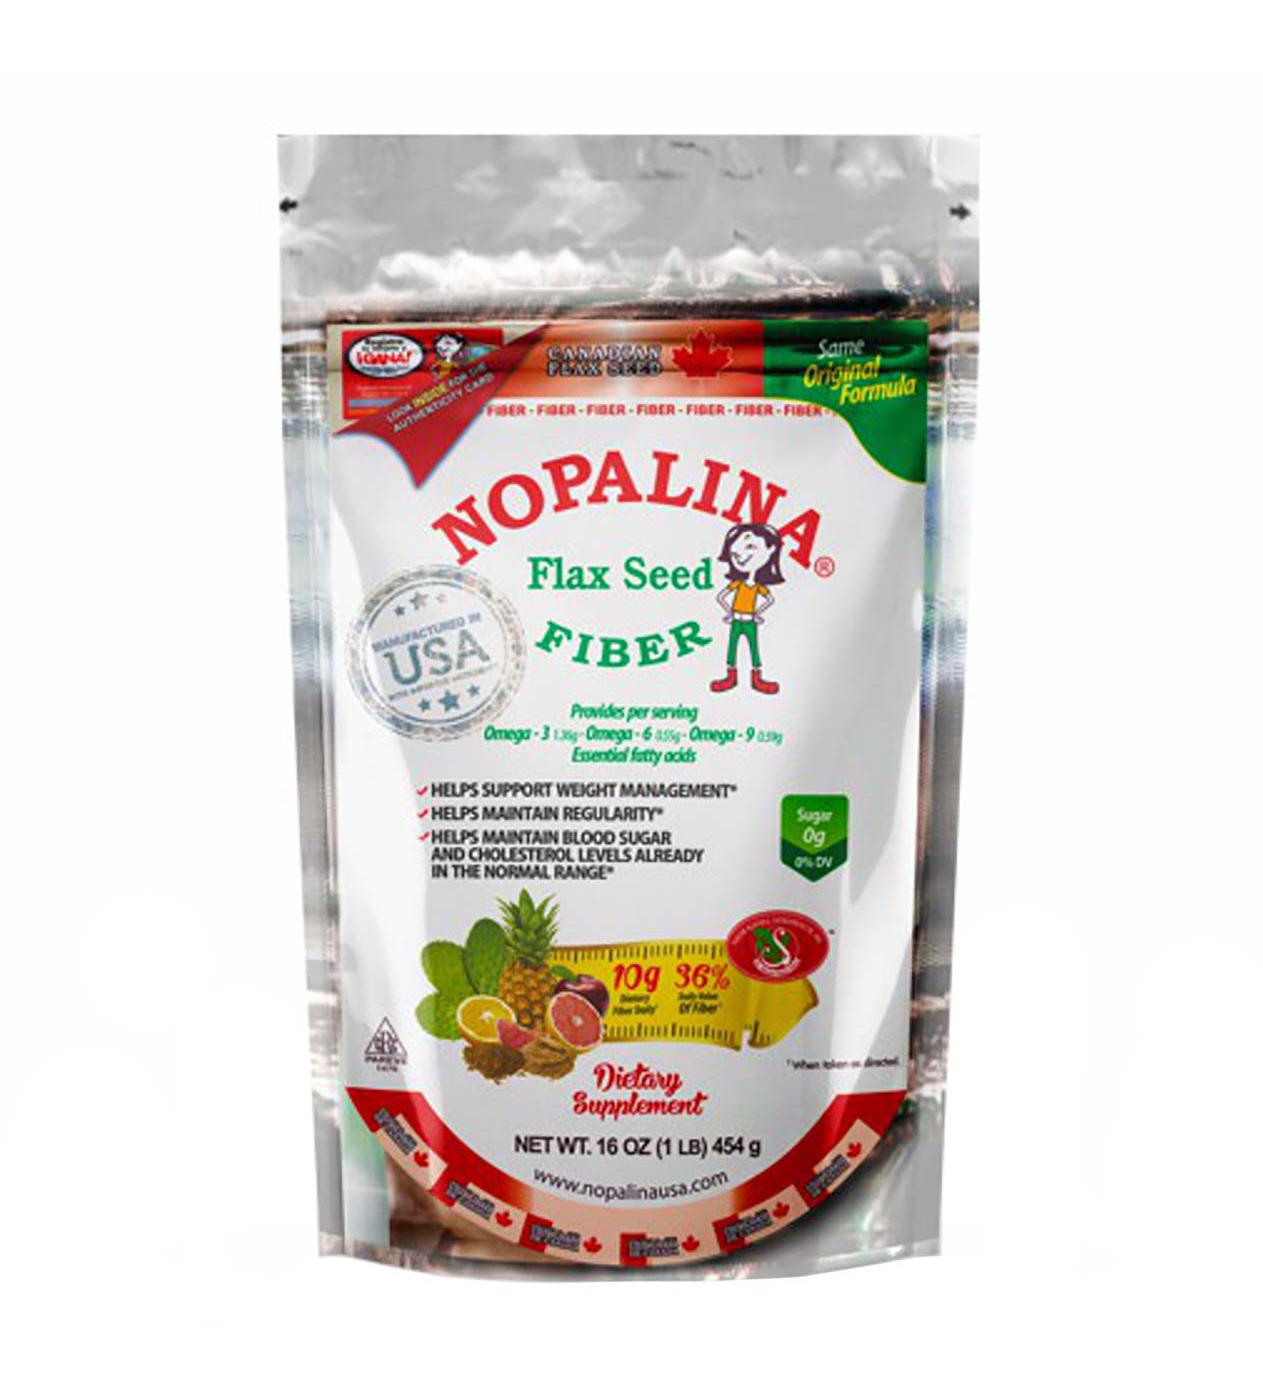 Nopalina Flax Seed Plus Formula; image 1 of 2